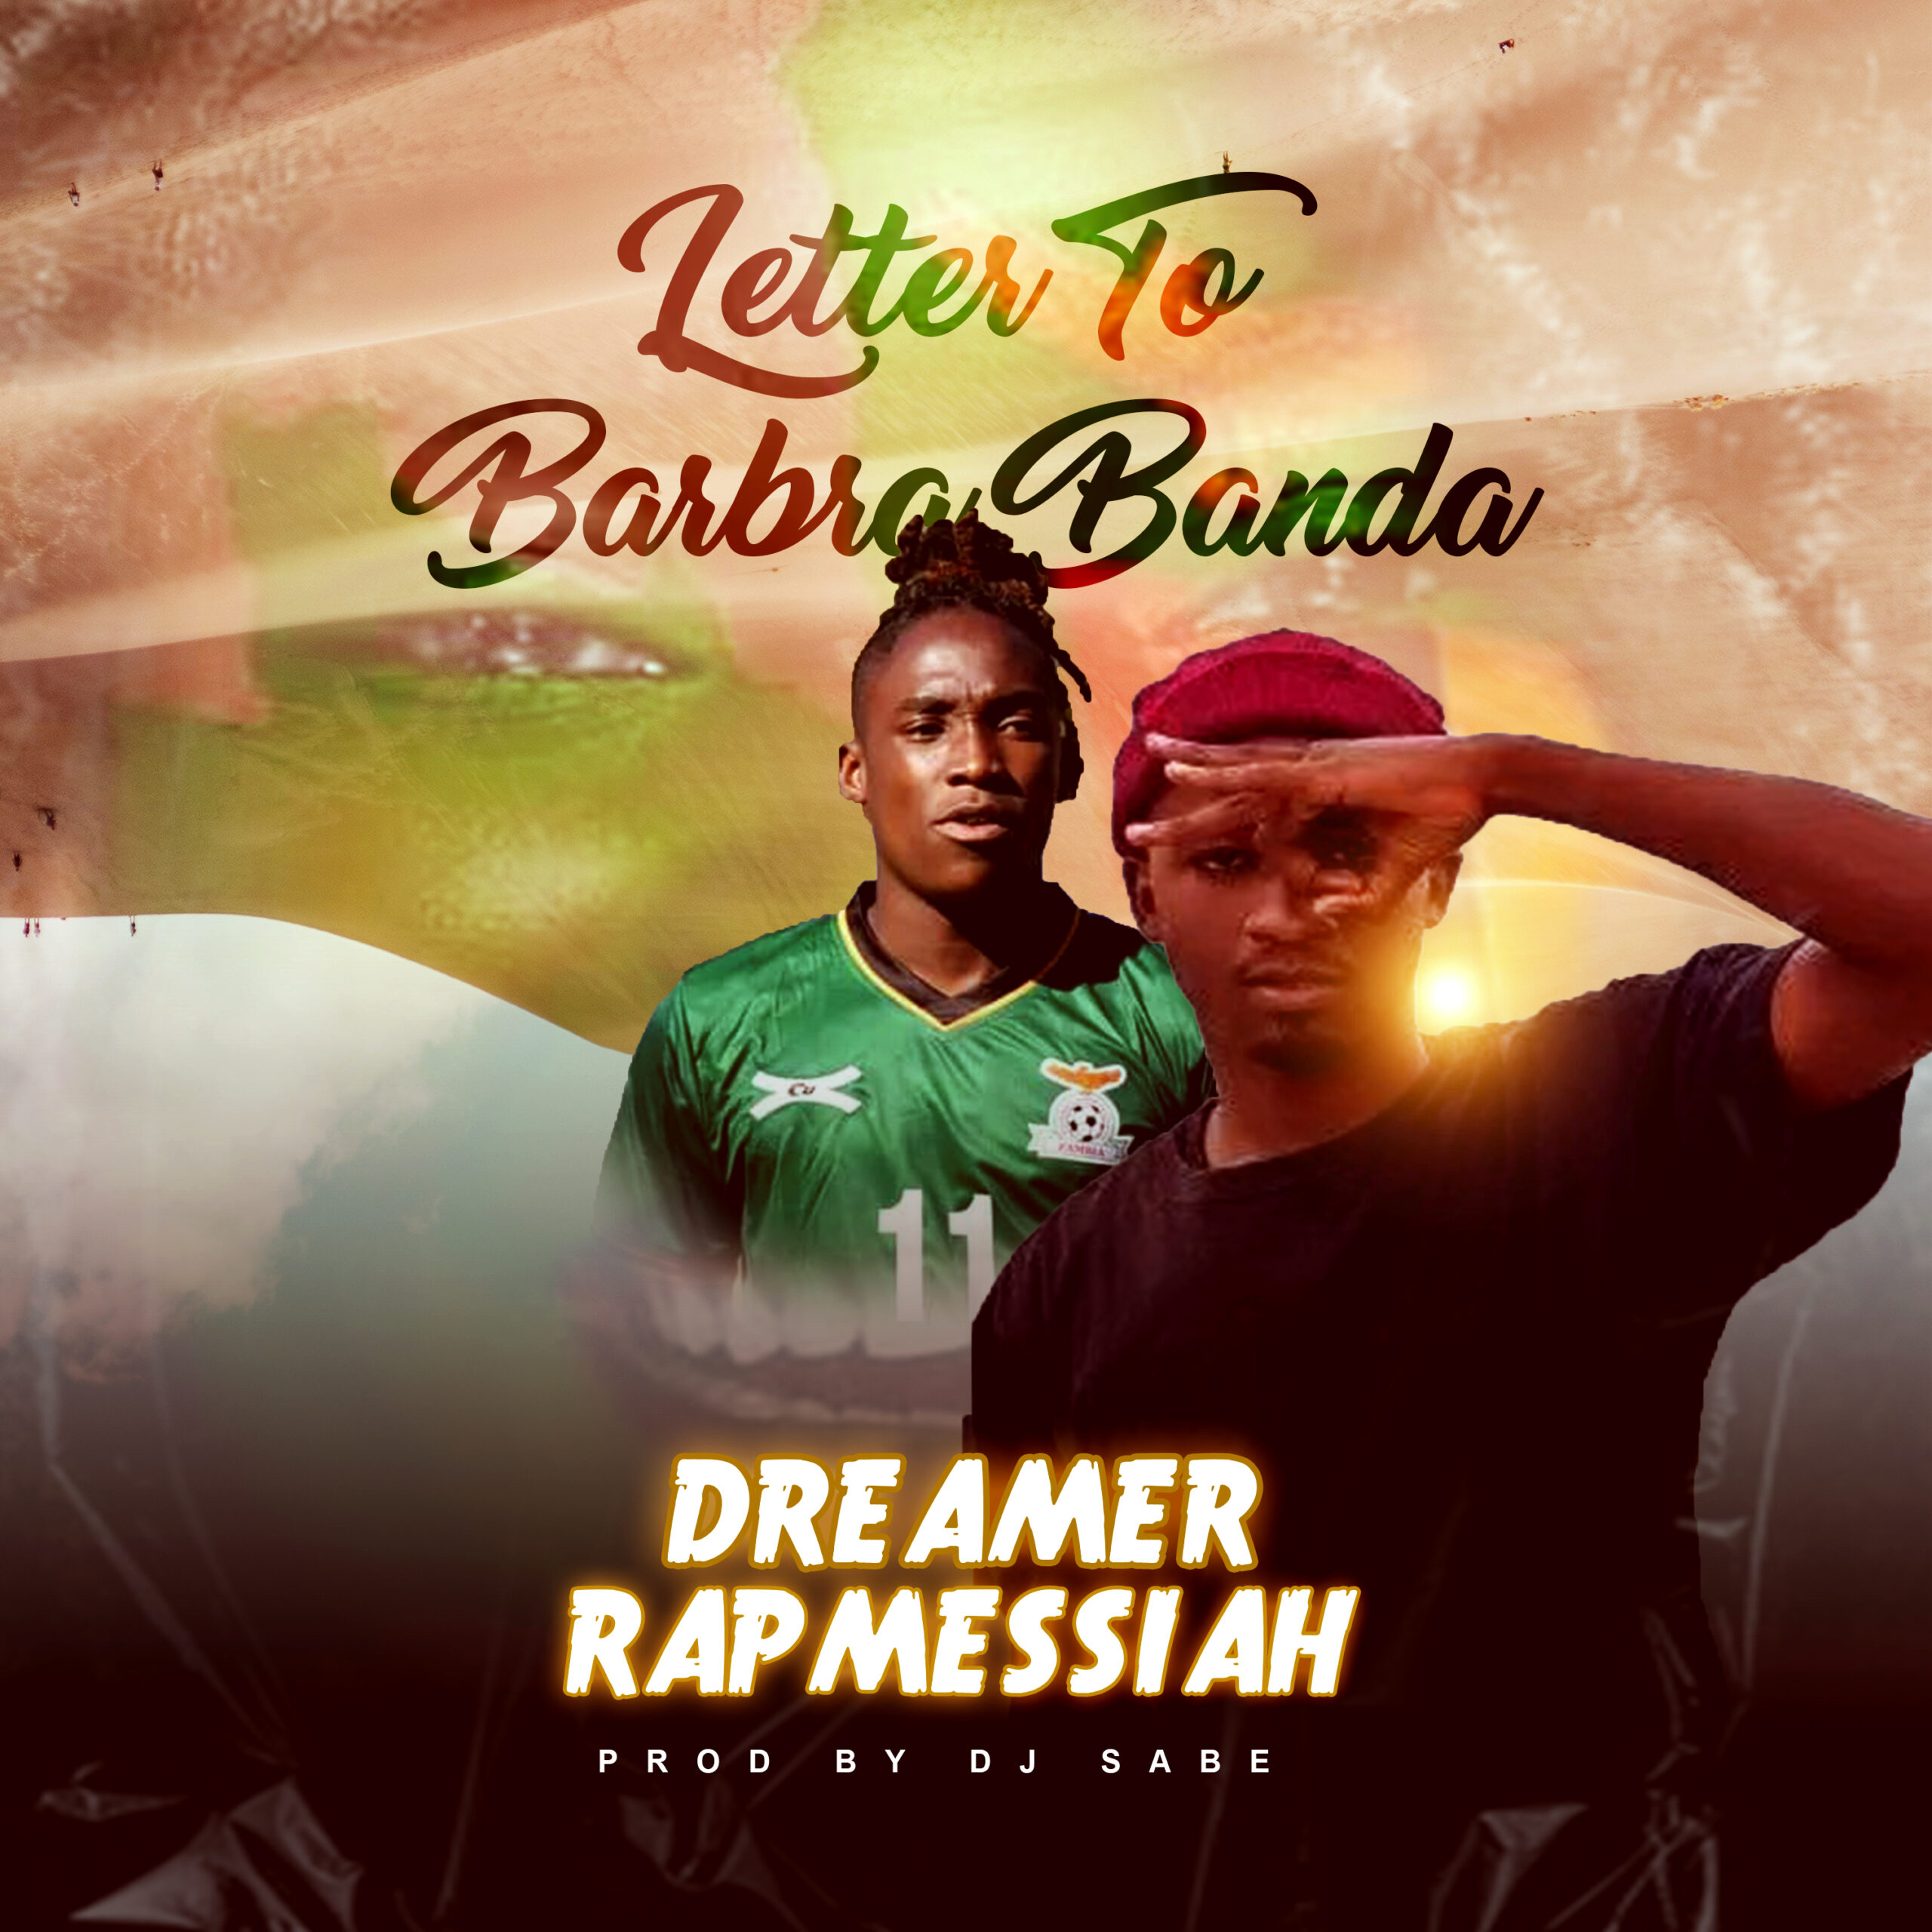 Dreamer Rapmessiah - Letter To Barbra Banda